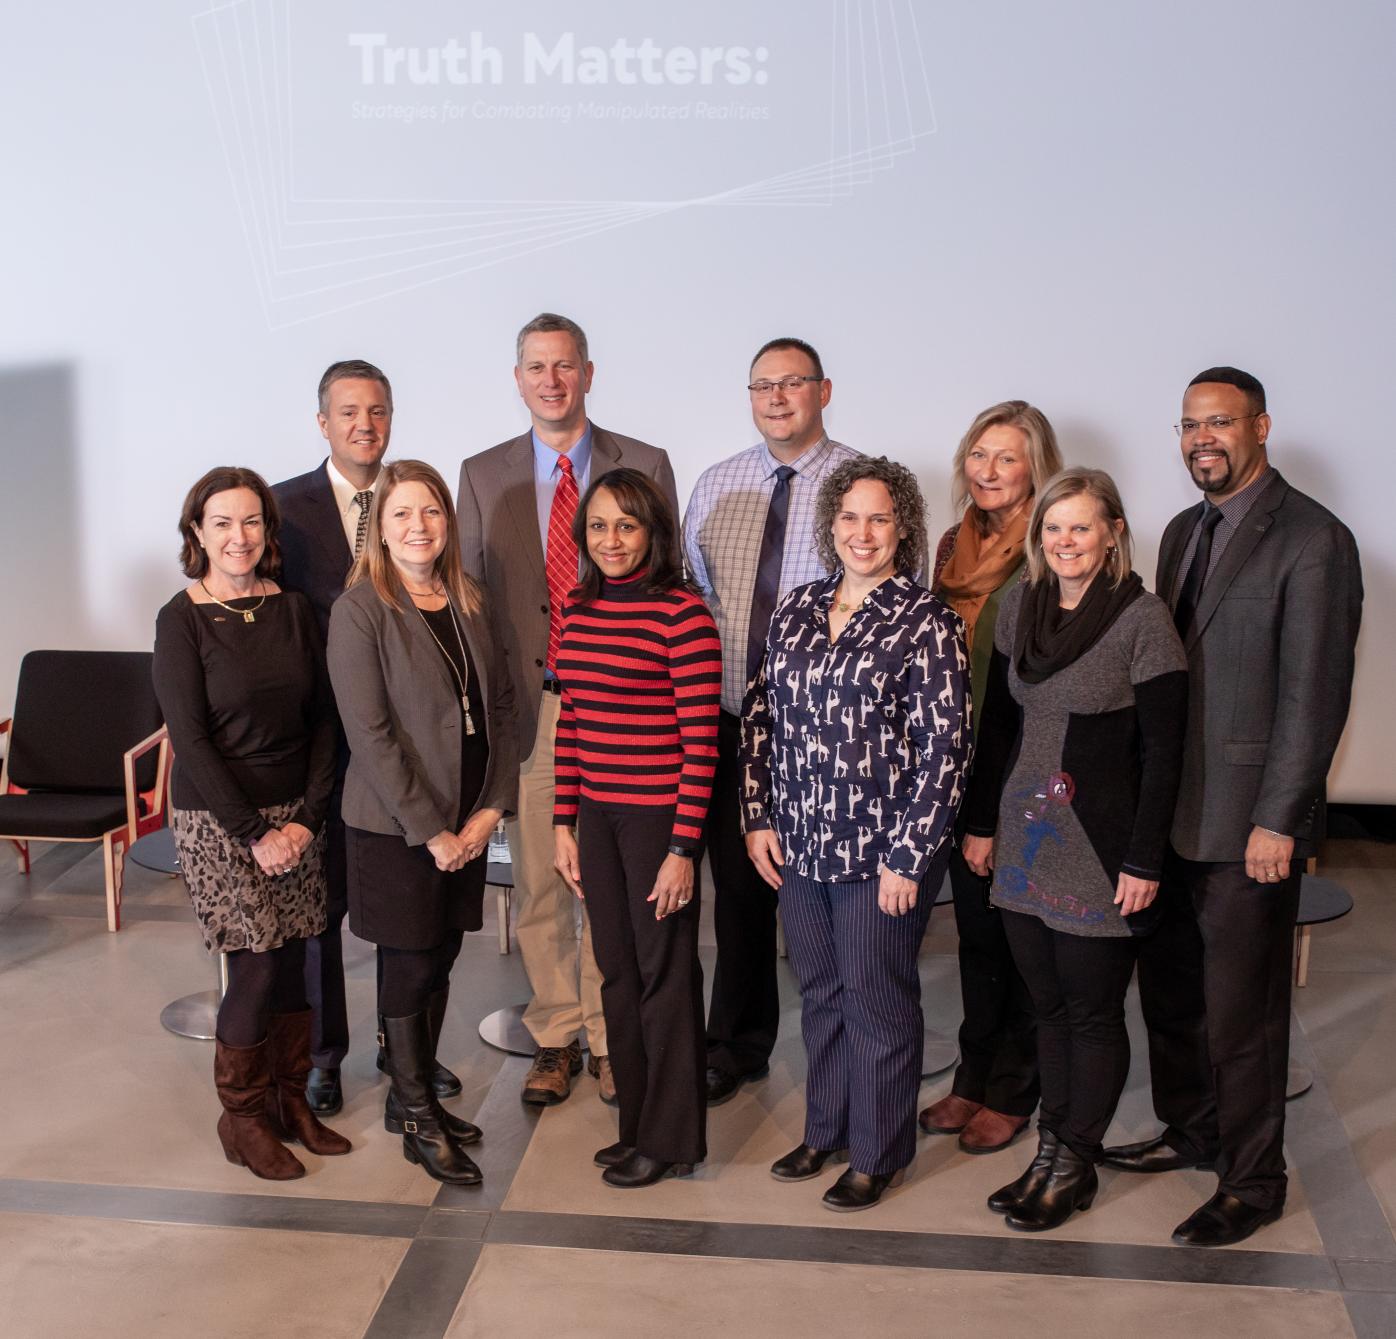 FLGS participants at Truth Matters seminar